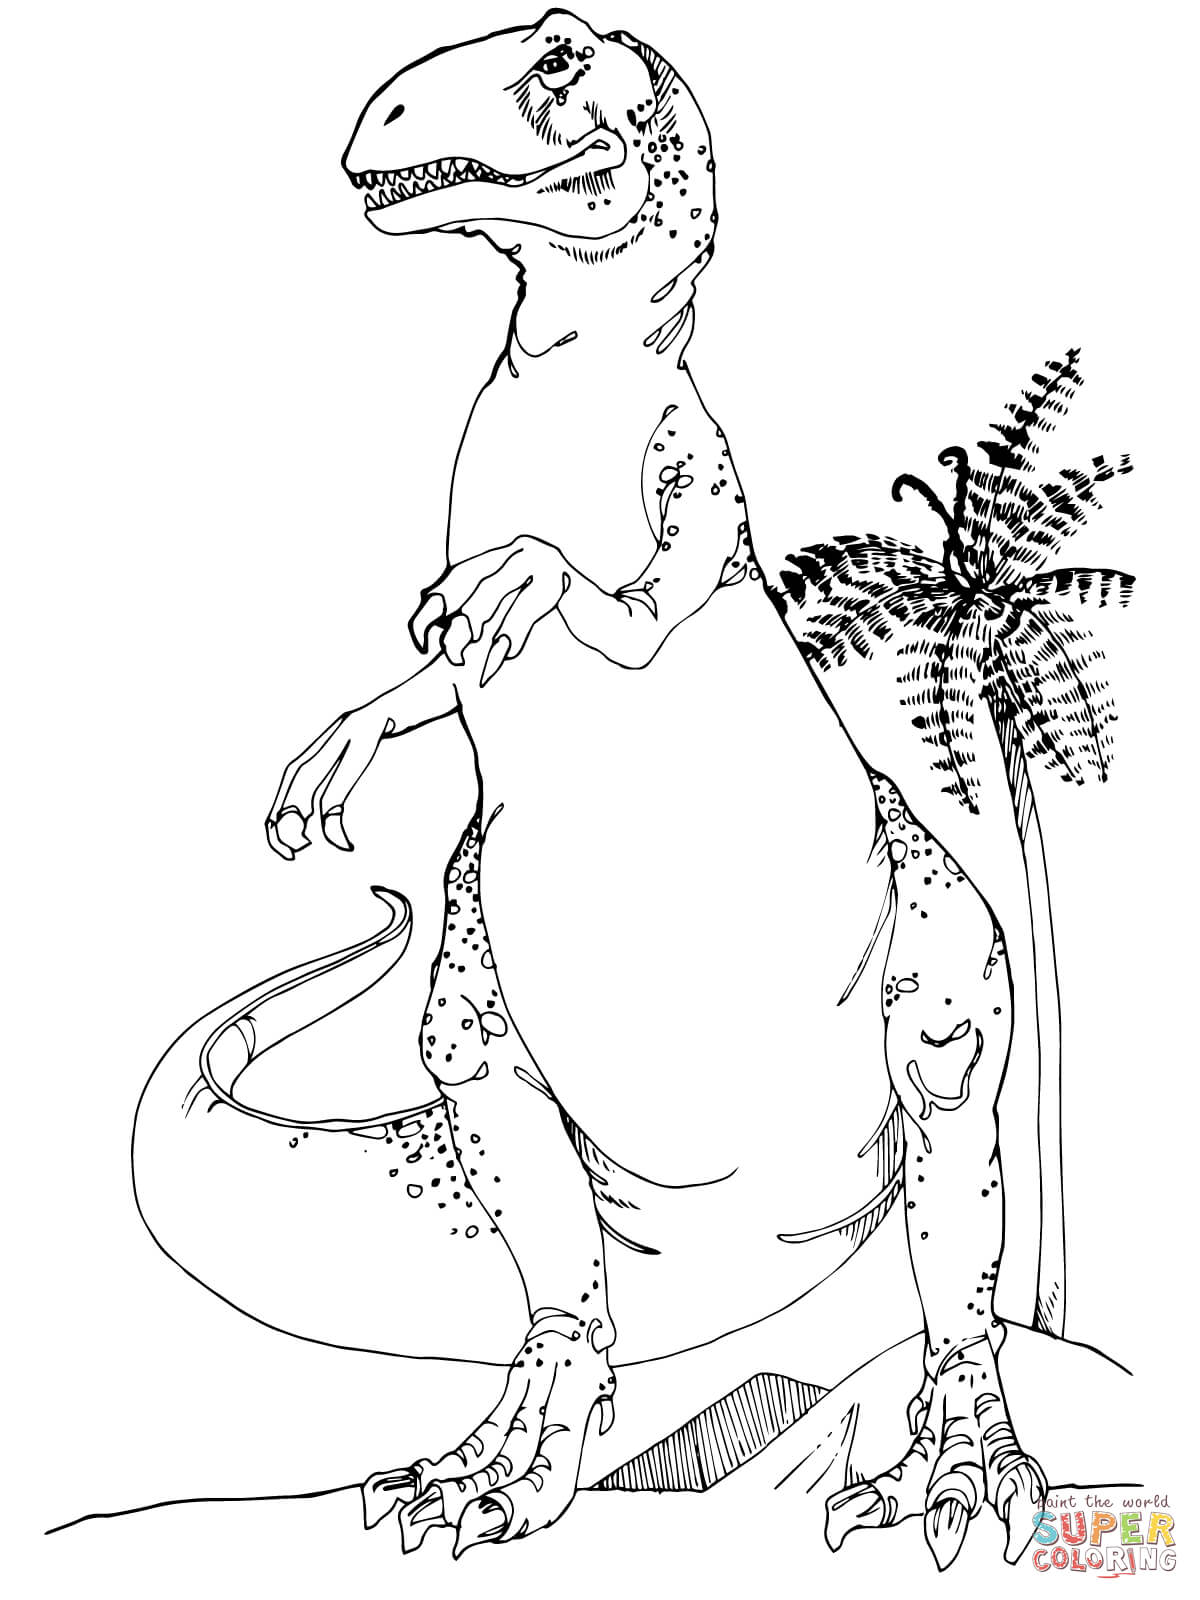 Allosaurus Jurassic Dinosaur coloring page | Free Printable Coloring Pages